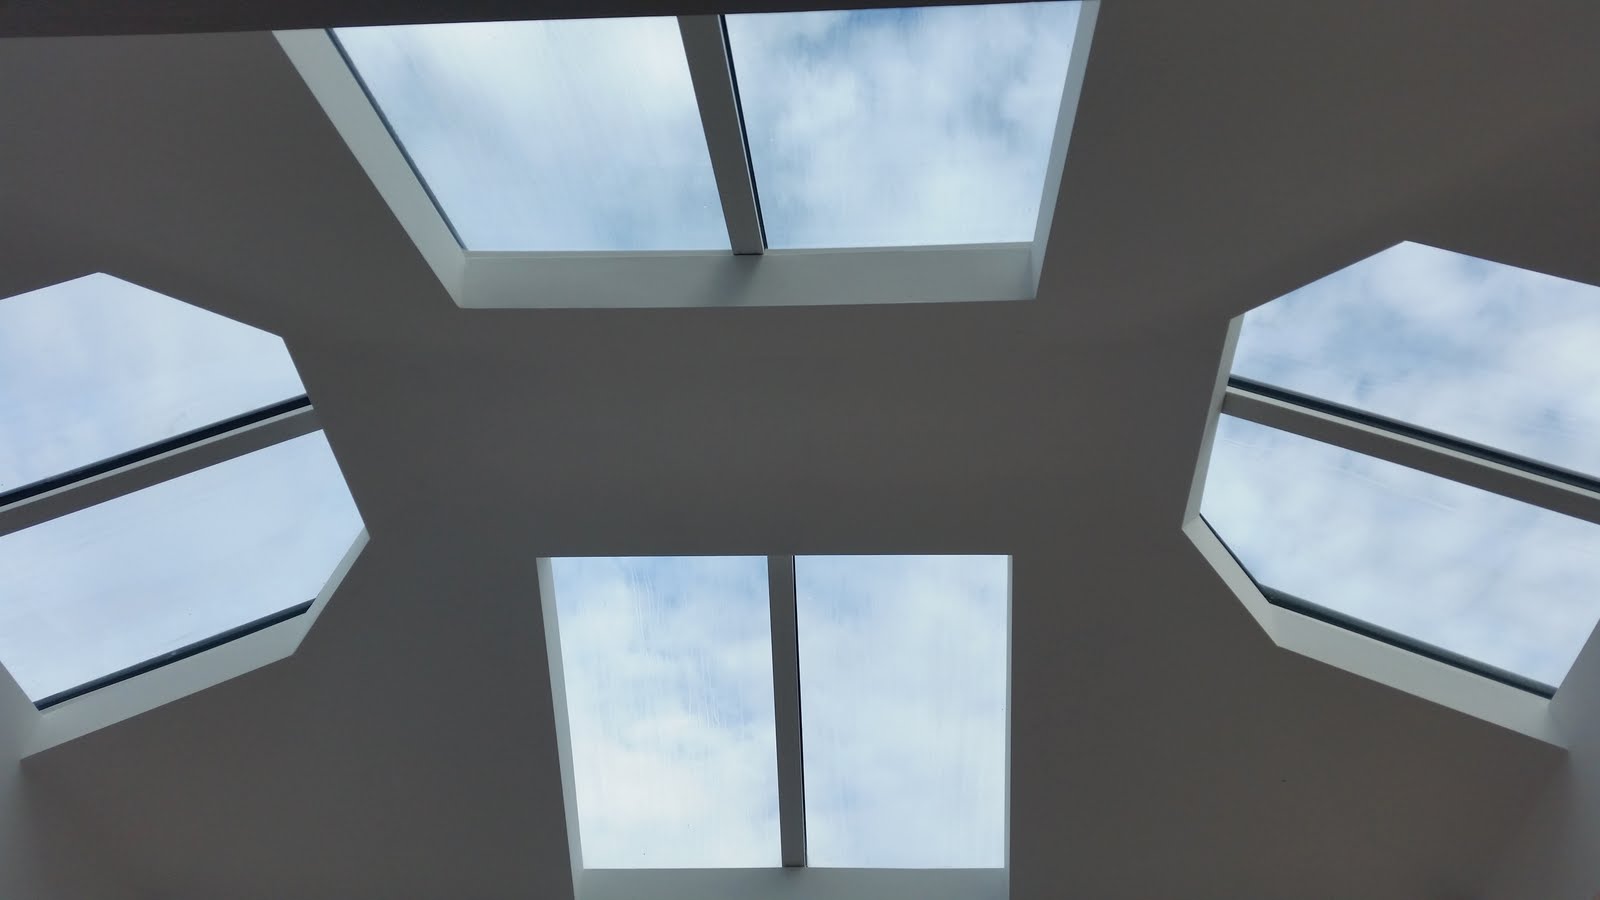 Inside view of a unique Livin room roof design.